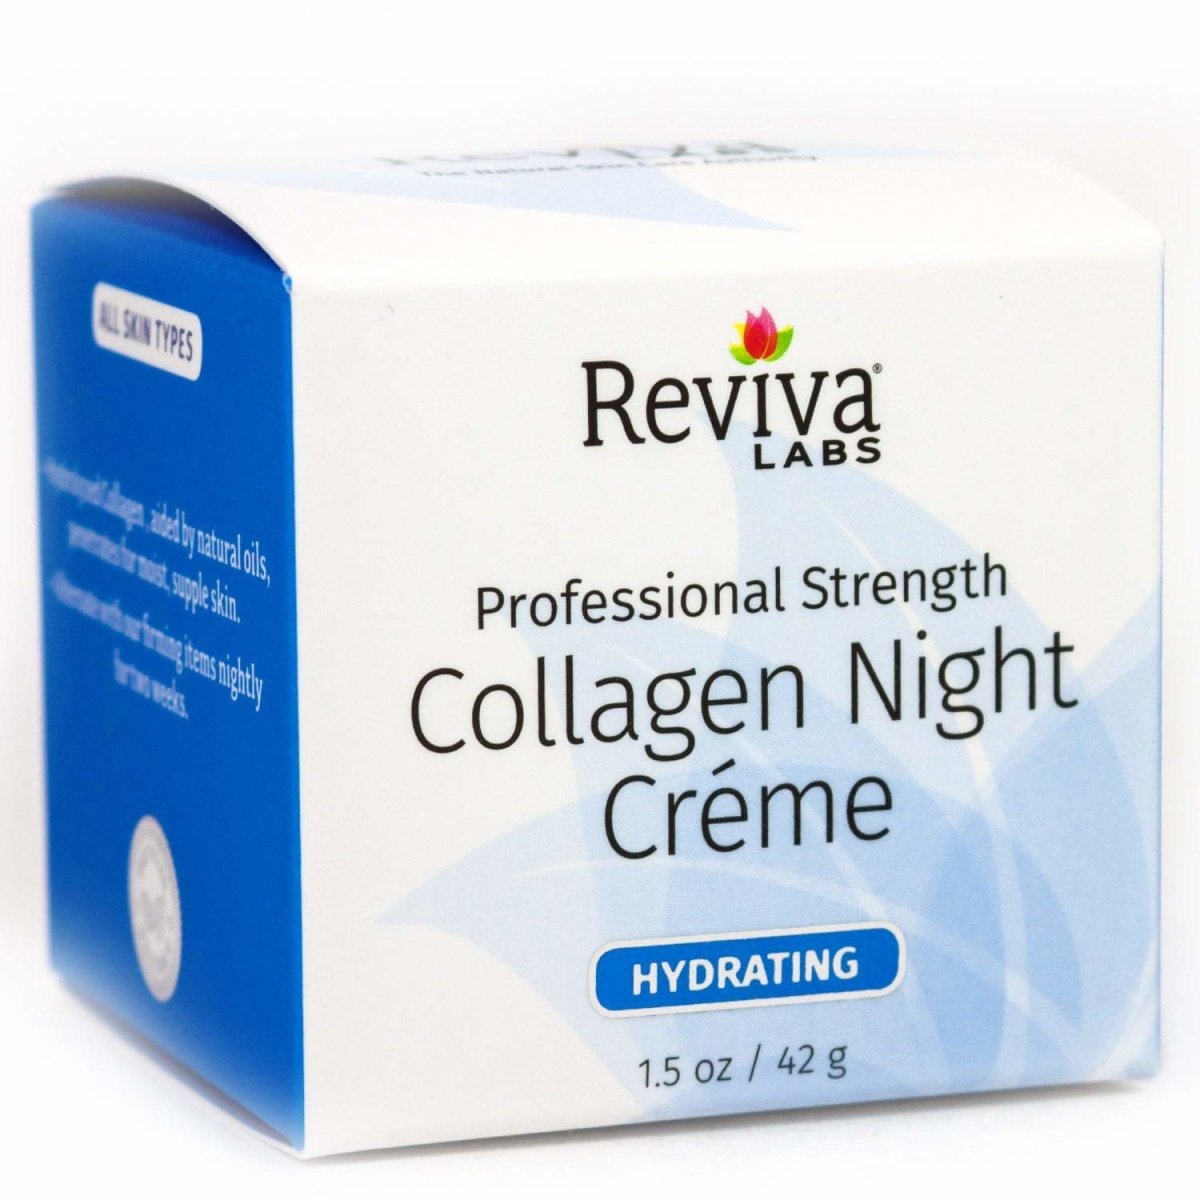 Collagen Night Creme Hidrating 1.5 Oz 42g